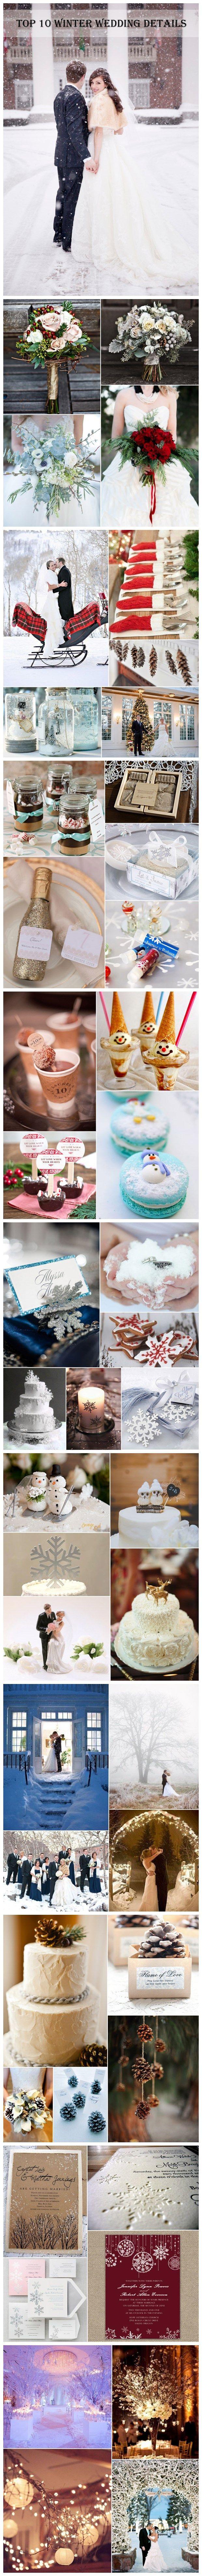 زفاف - Top 10 Winter Wedding Ideas & Quirky Details 2014